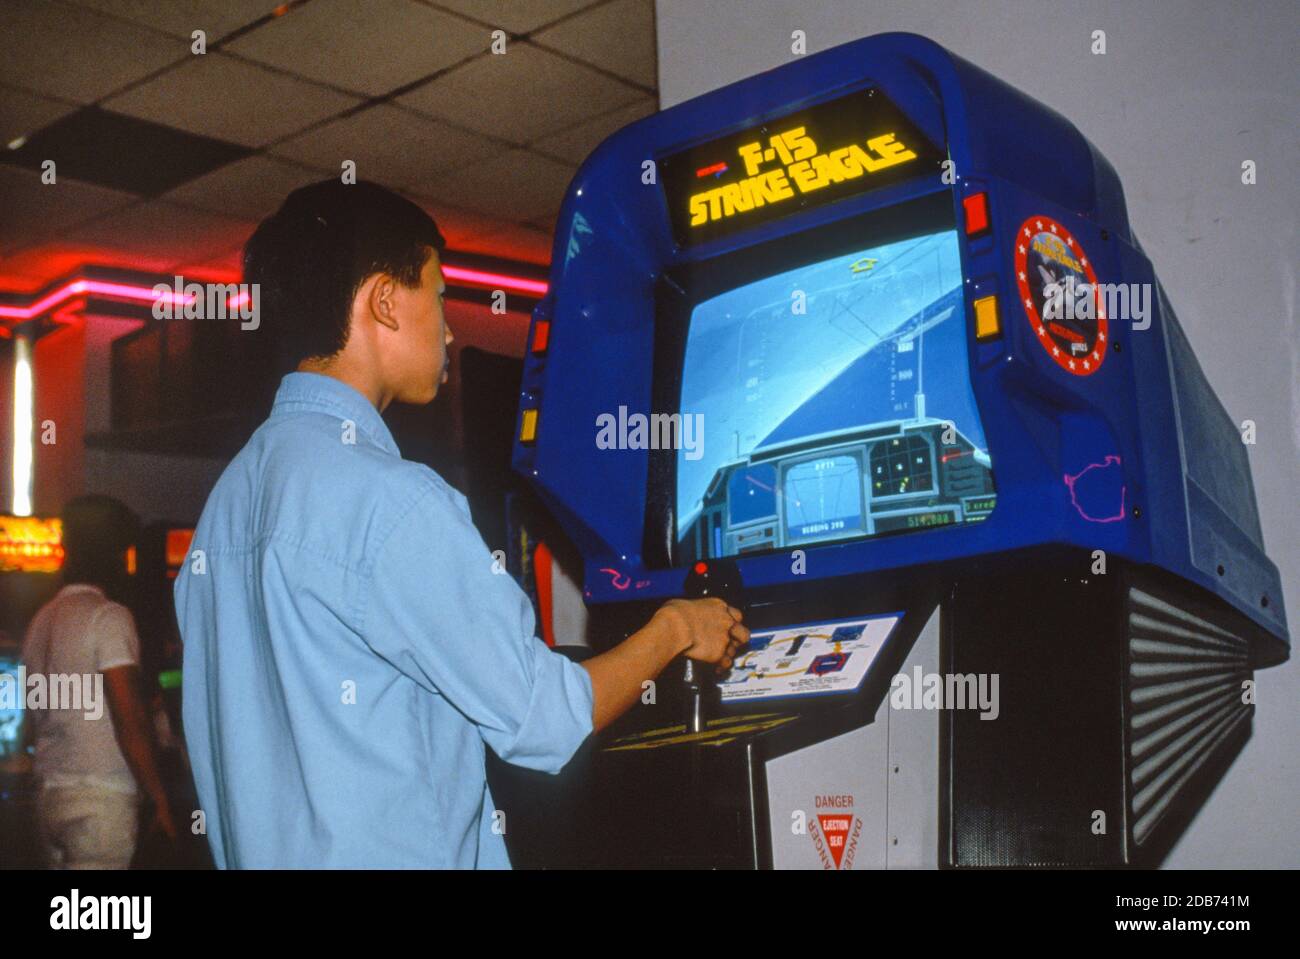 BOSTON, MASSACHUSETTS, USA, NOVEMBER 1990:  Arcade computer video game F-15 Strike Eagle played by man in arcade. Video game simulates air warfare. Stock Photo